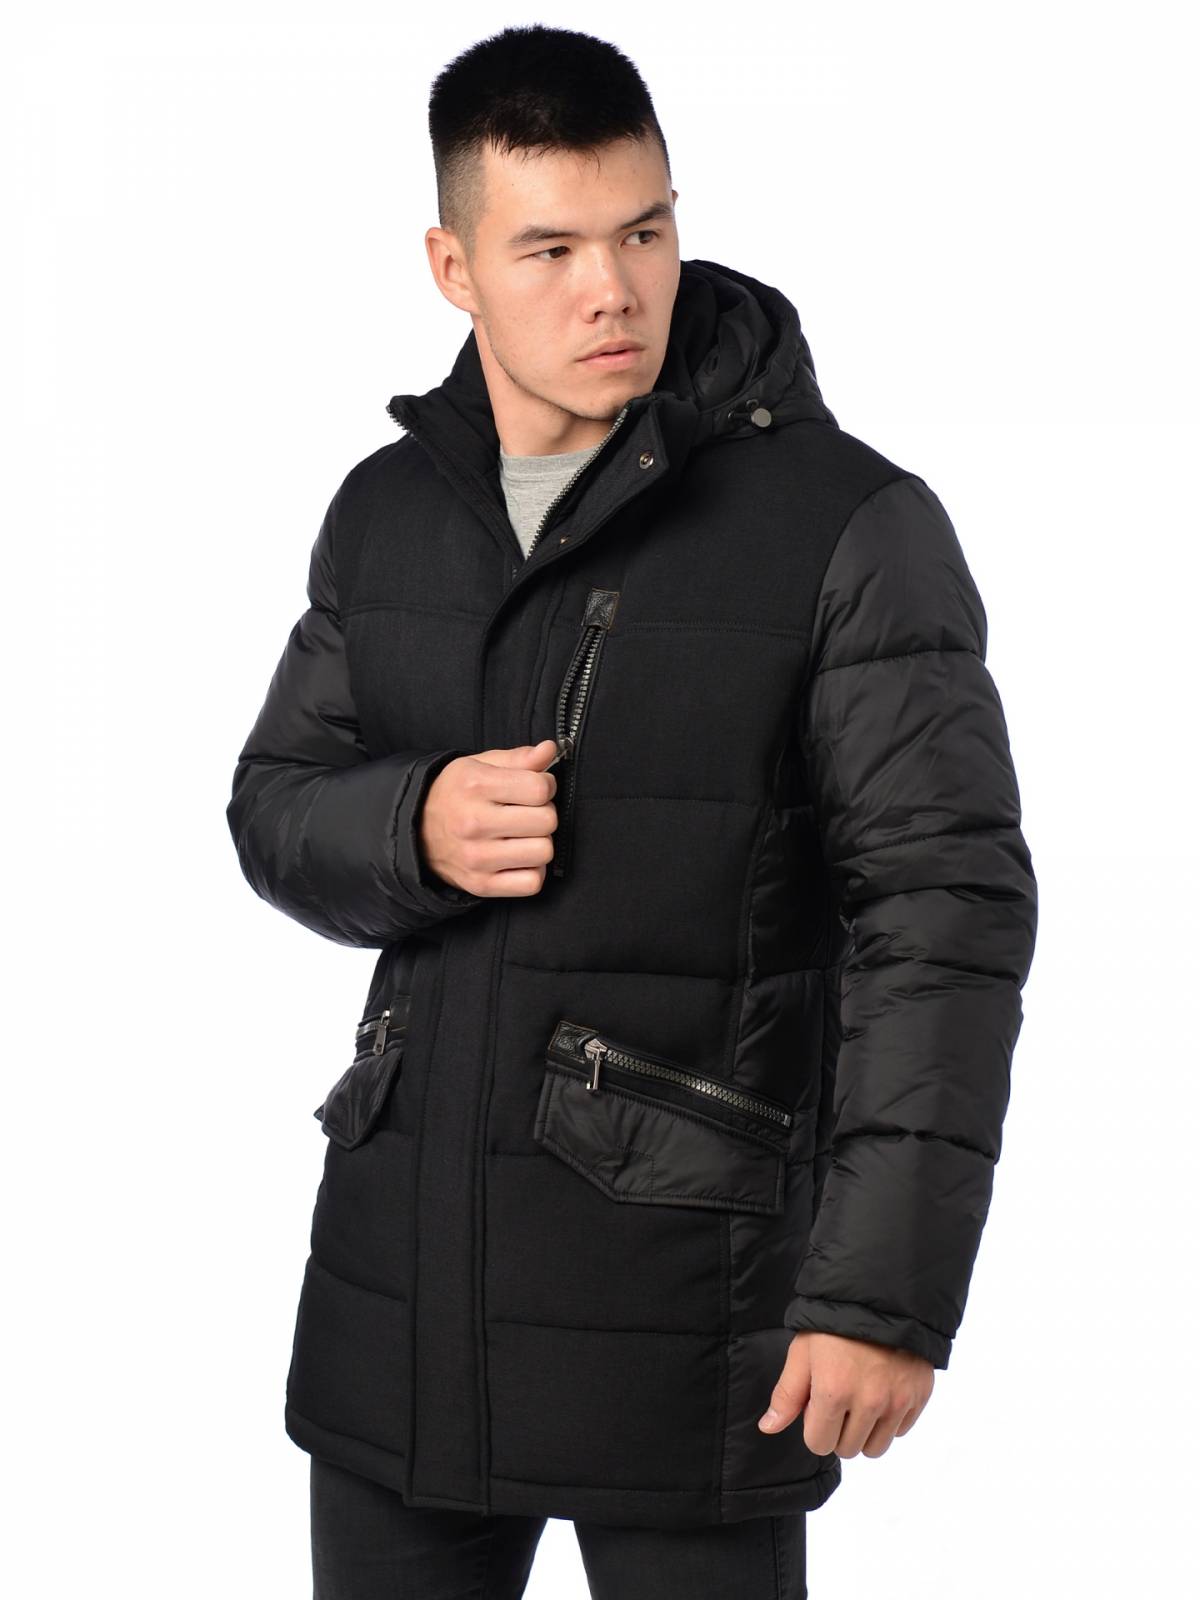 Зимняя куртка мужская Fanfaroni 3185 черная 48 RU